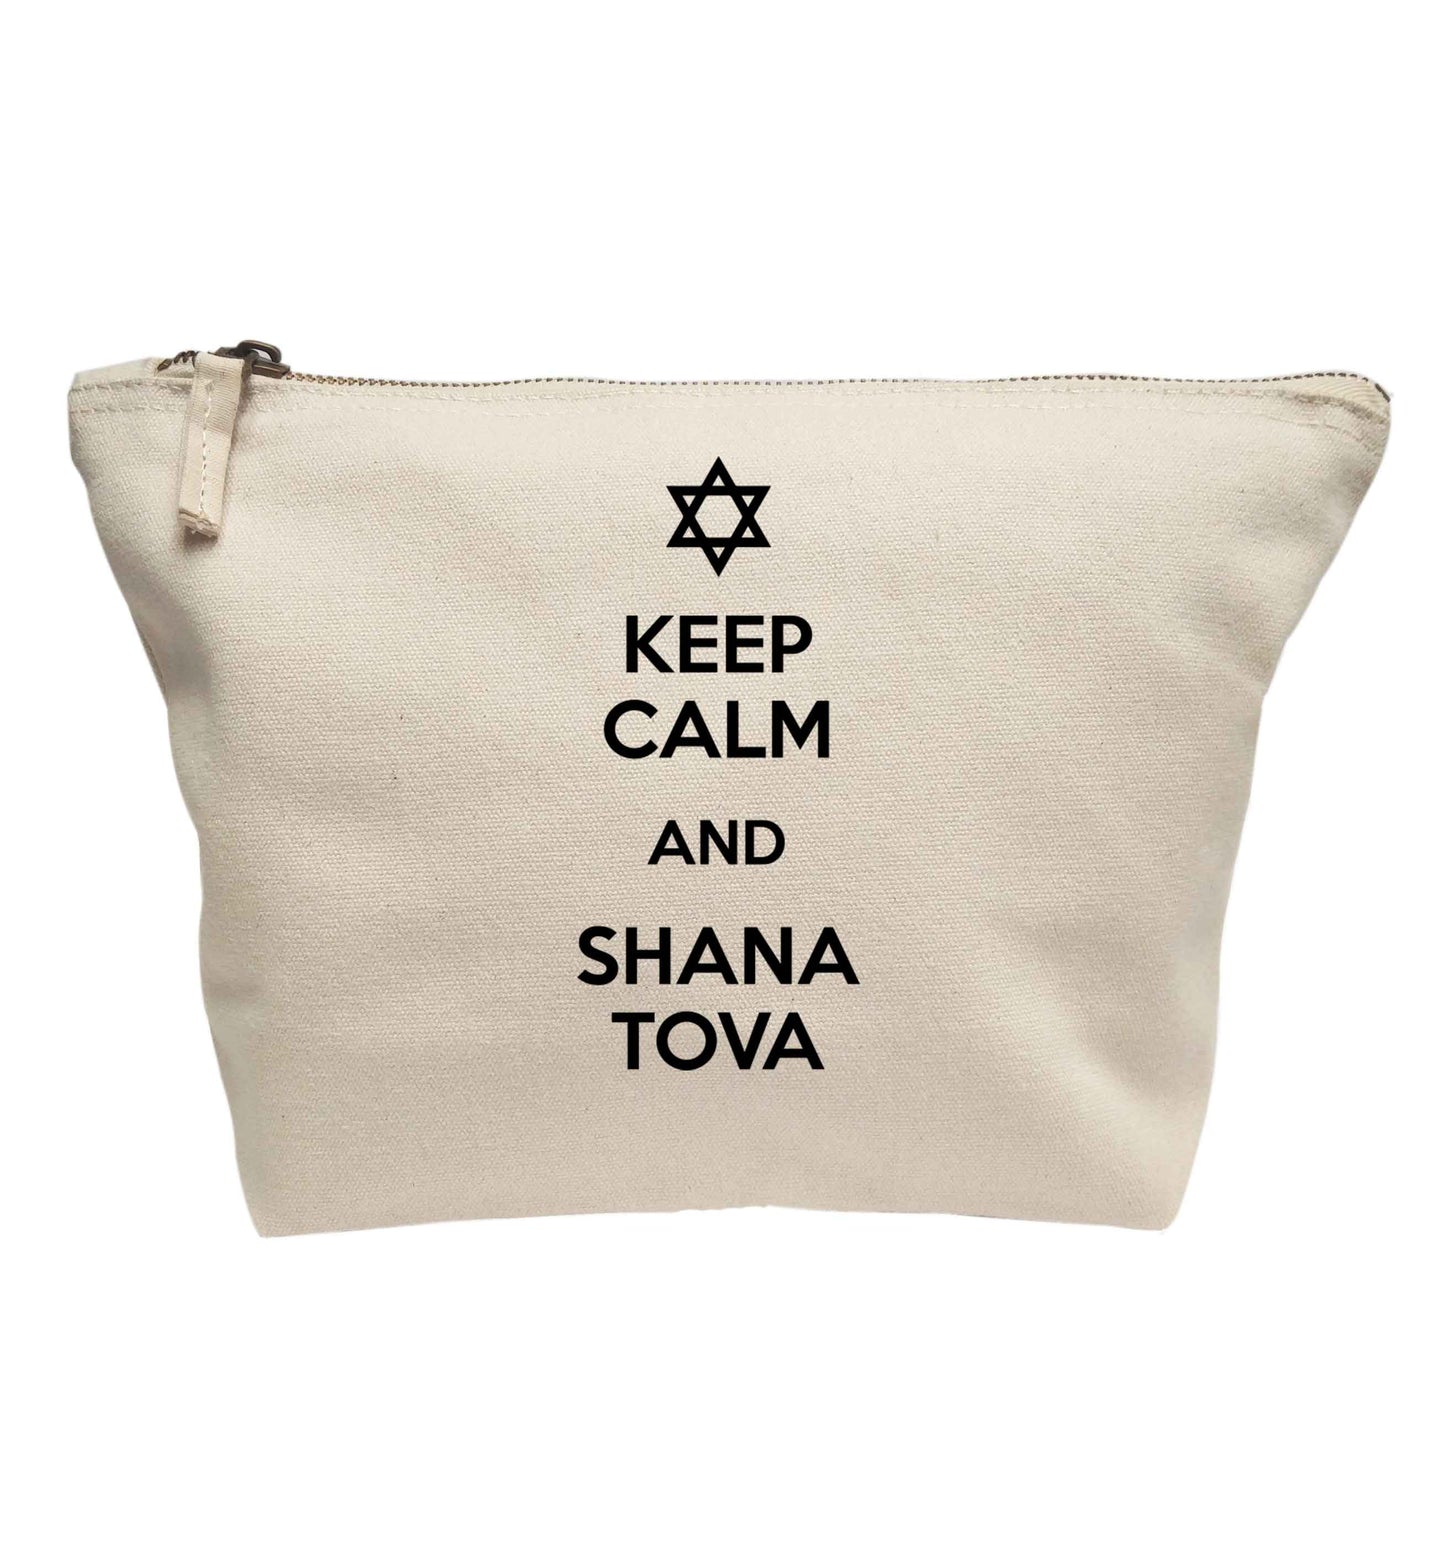 Keep calm and shana tova | makeup / wash bag